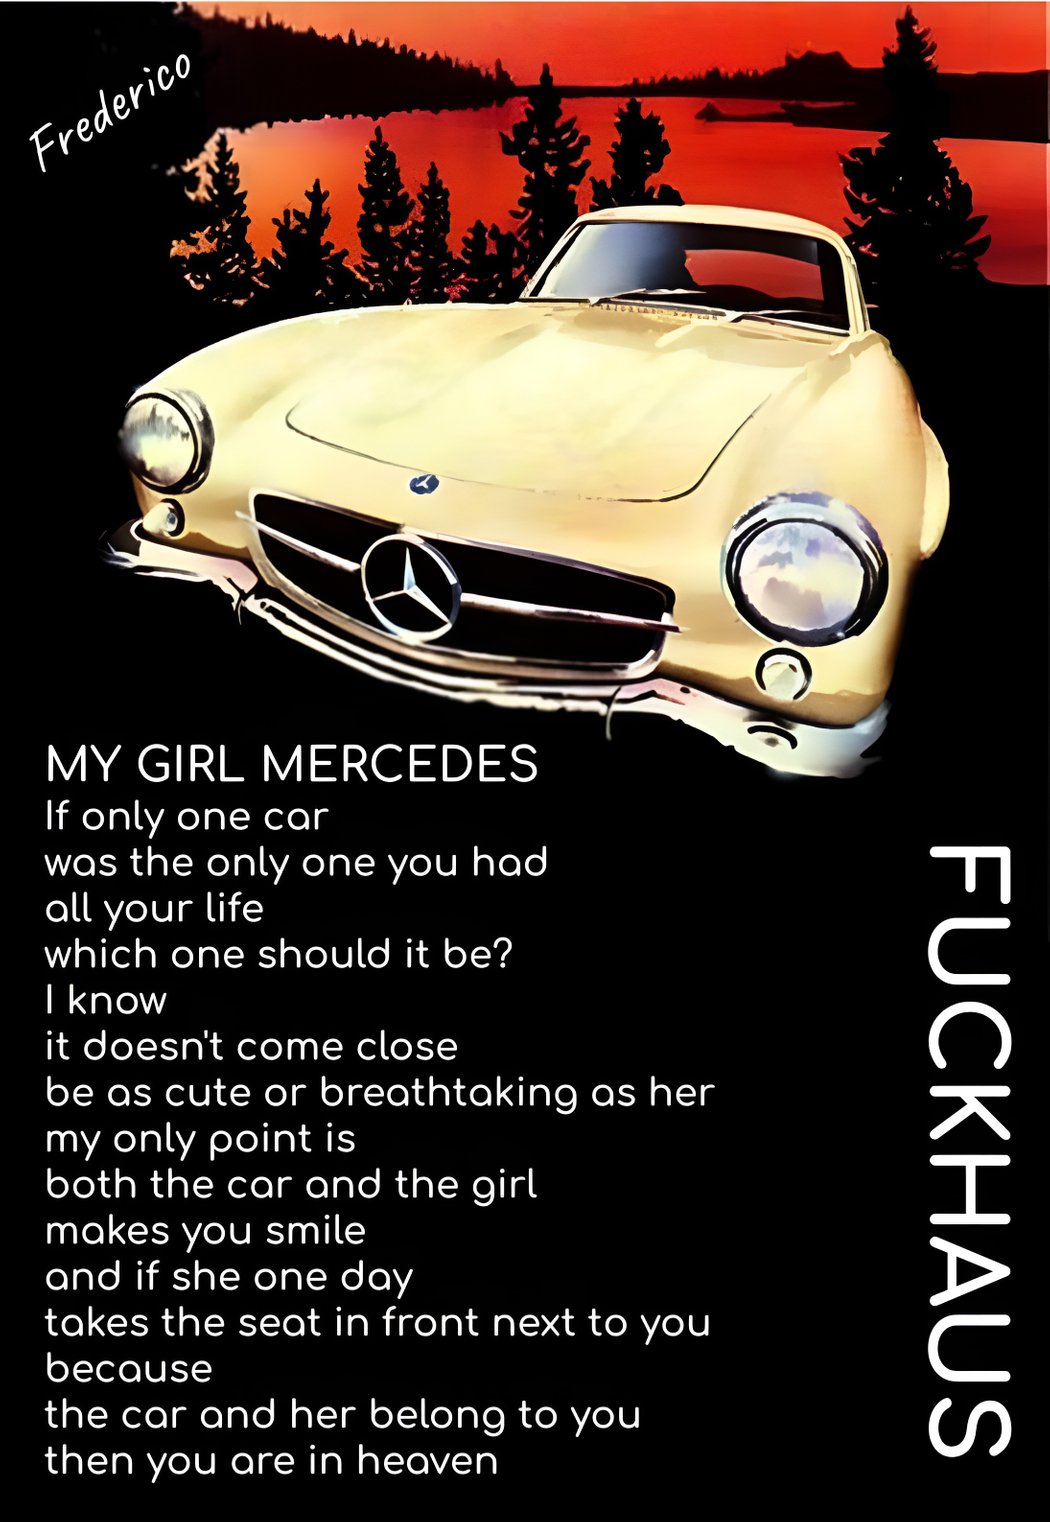 My girl Mercedes